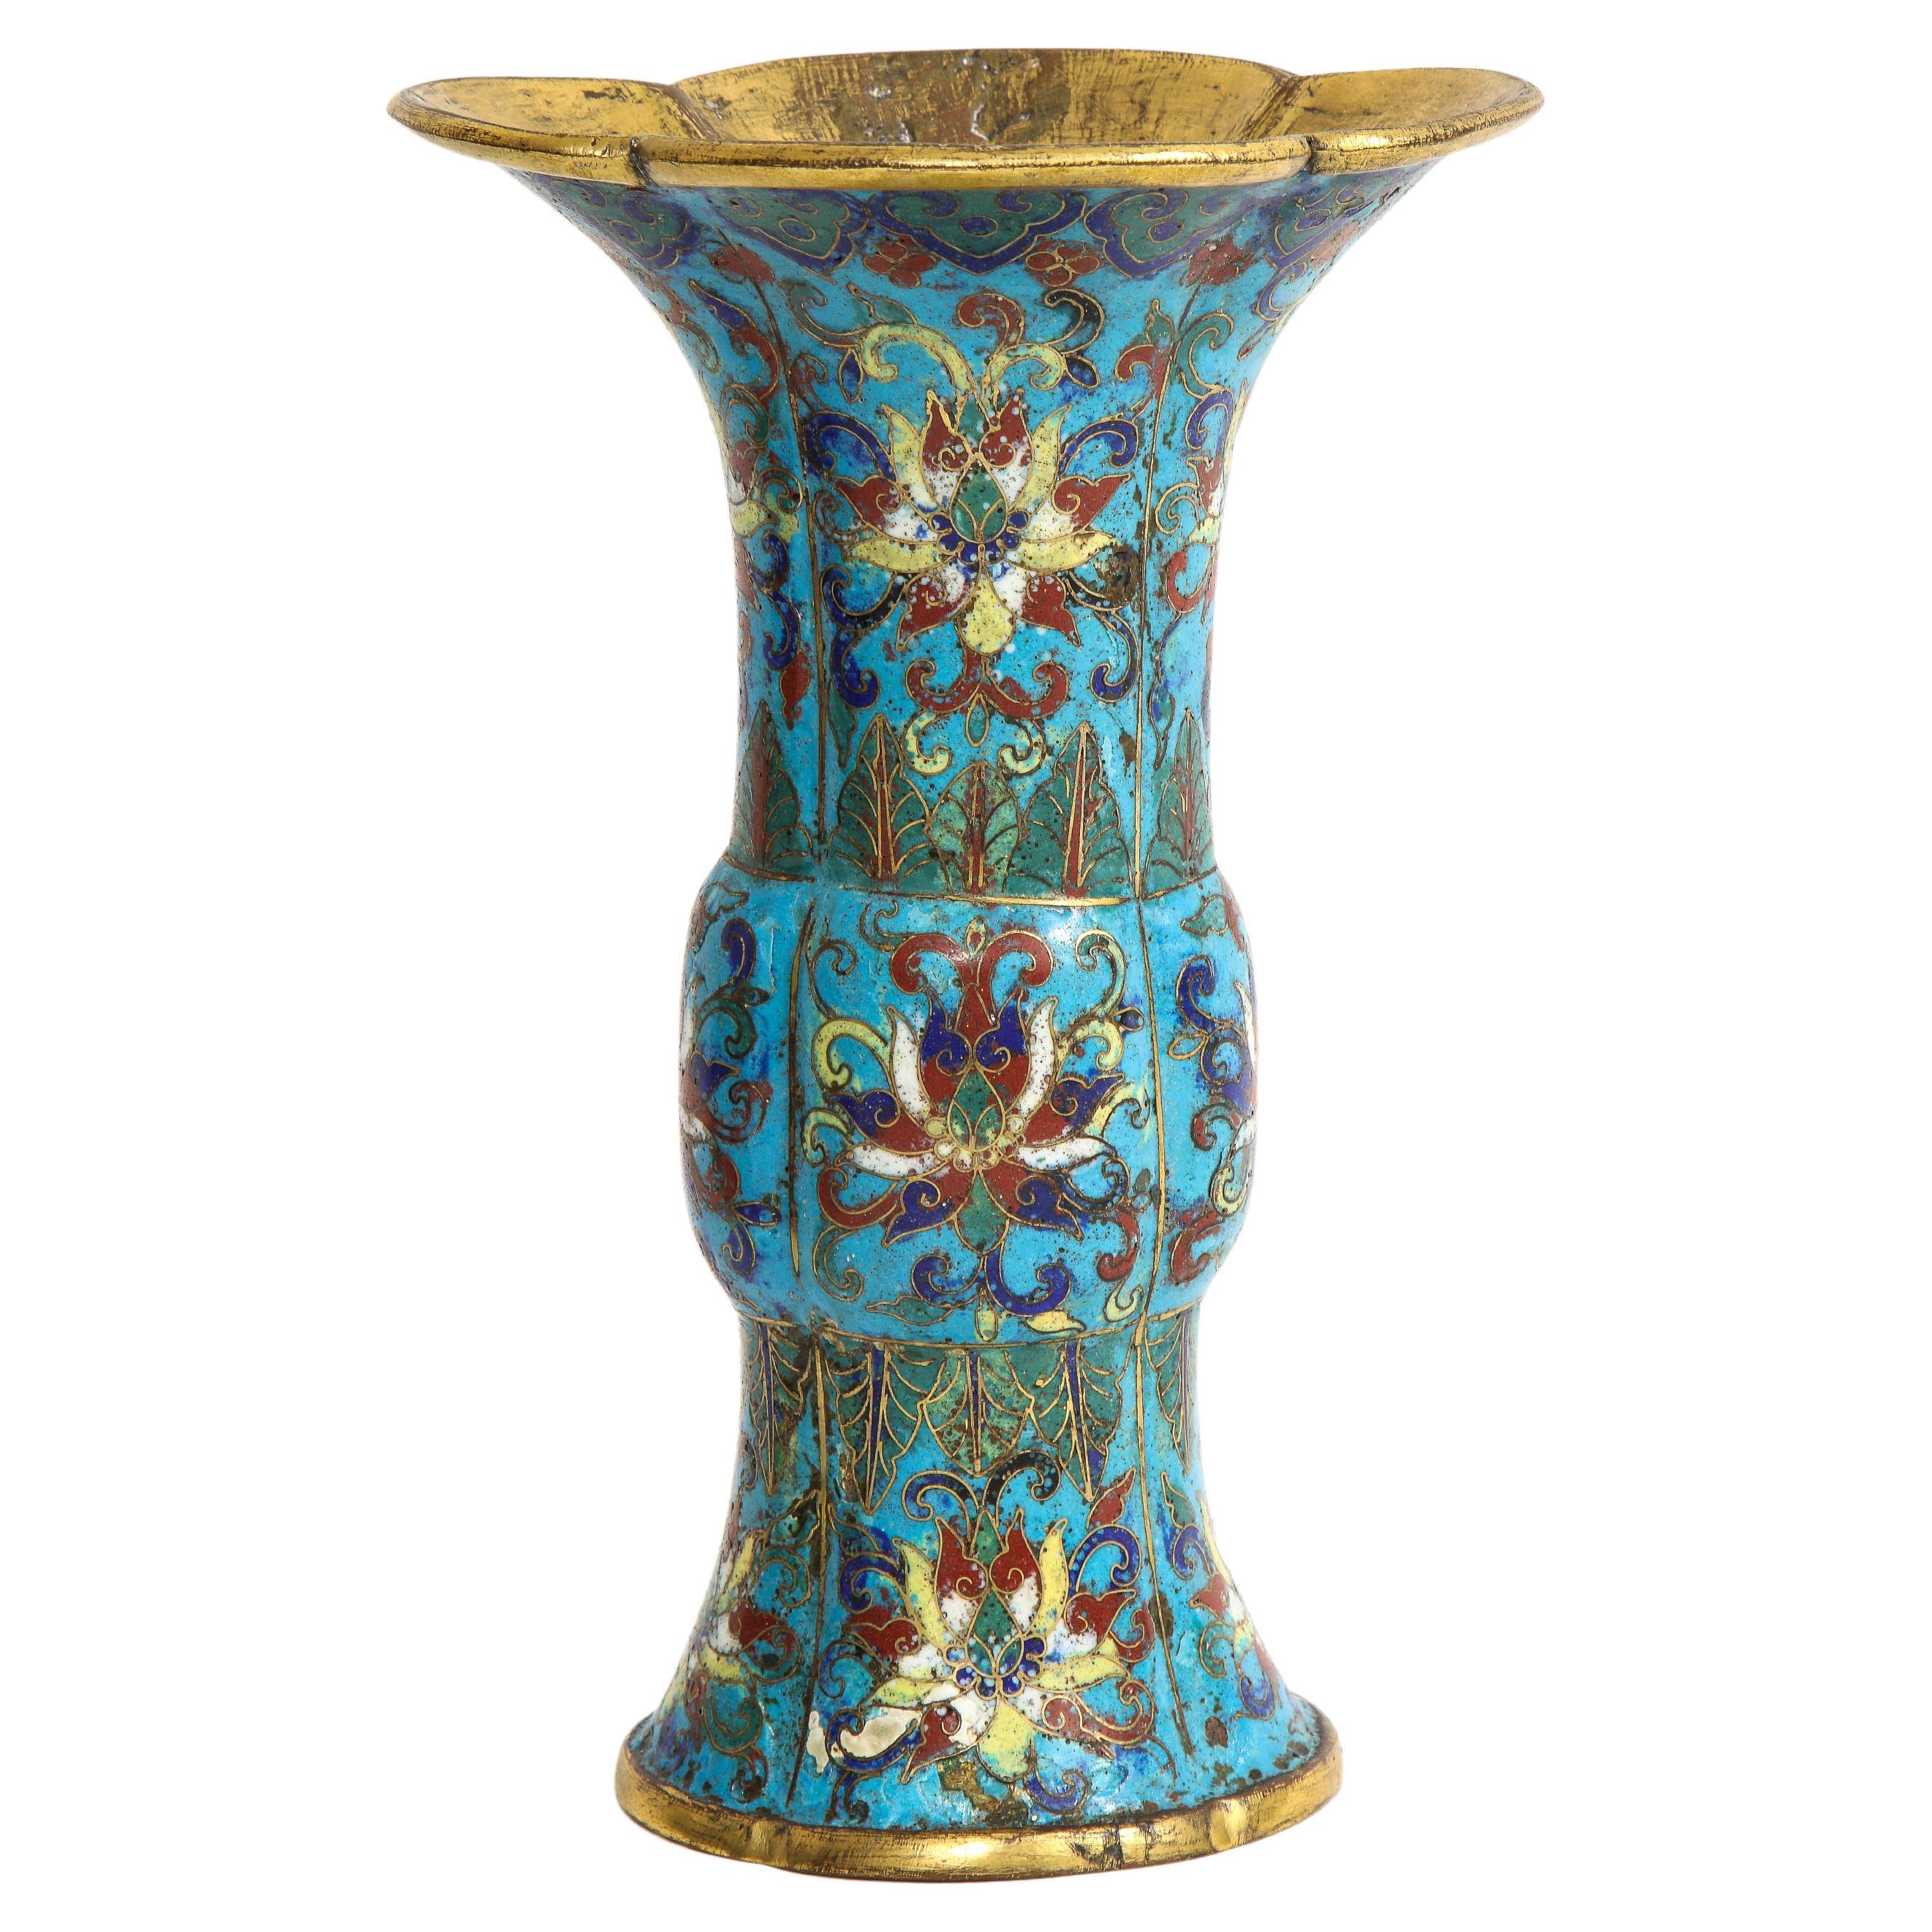 Antique Chinese Cloisonné Enamel Gu Form Vase, 17th/18th Century, Kangxi Period